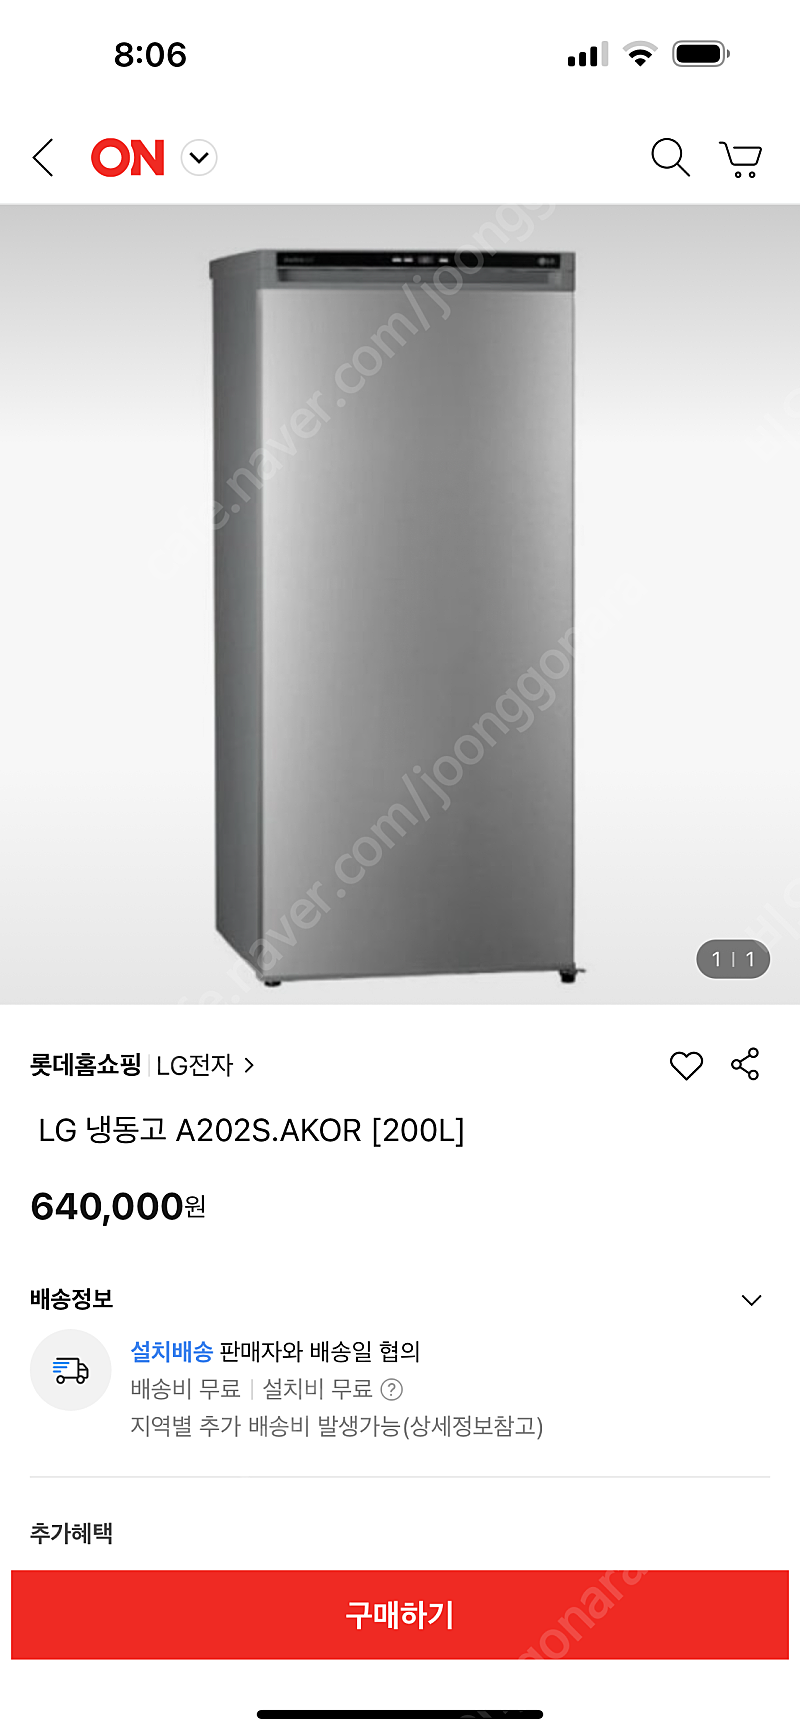 LG 냉동고 200L (22년 2월구매) 판매합니다